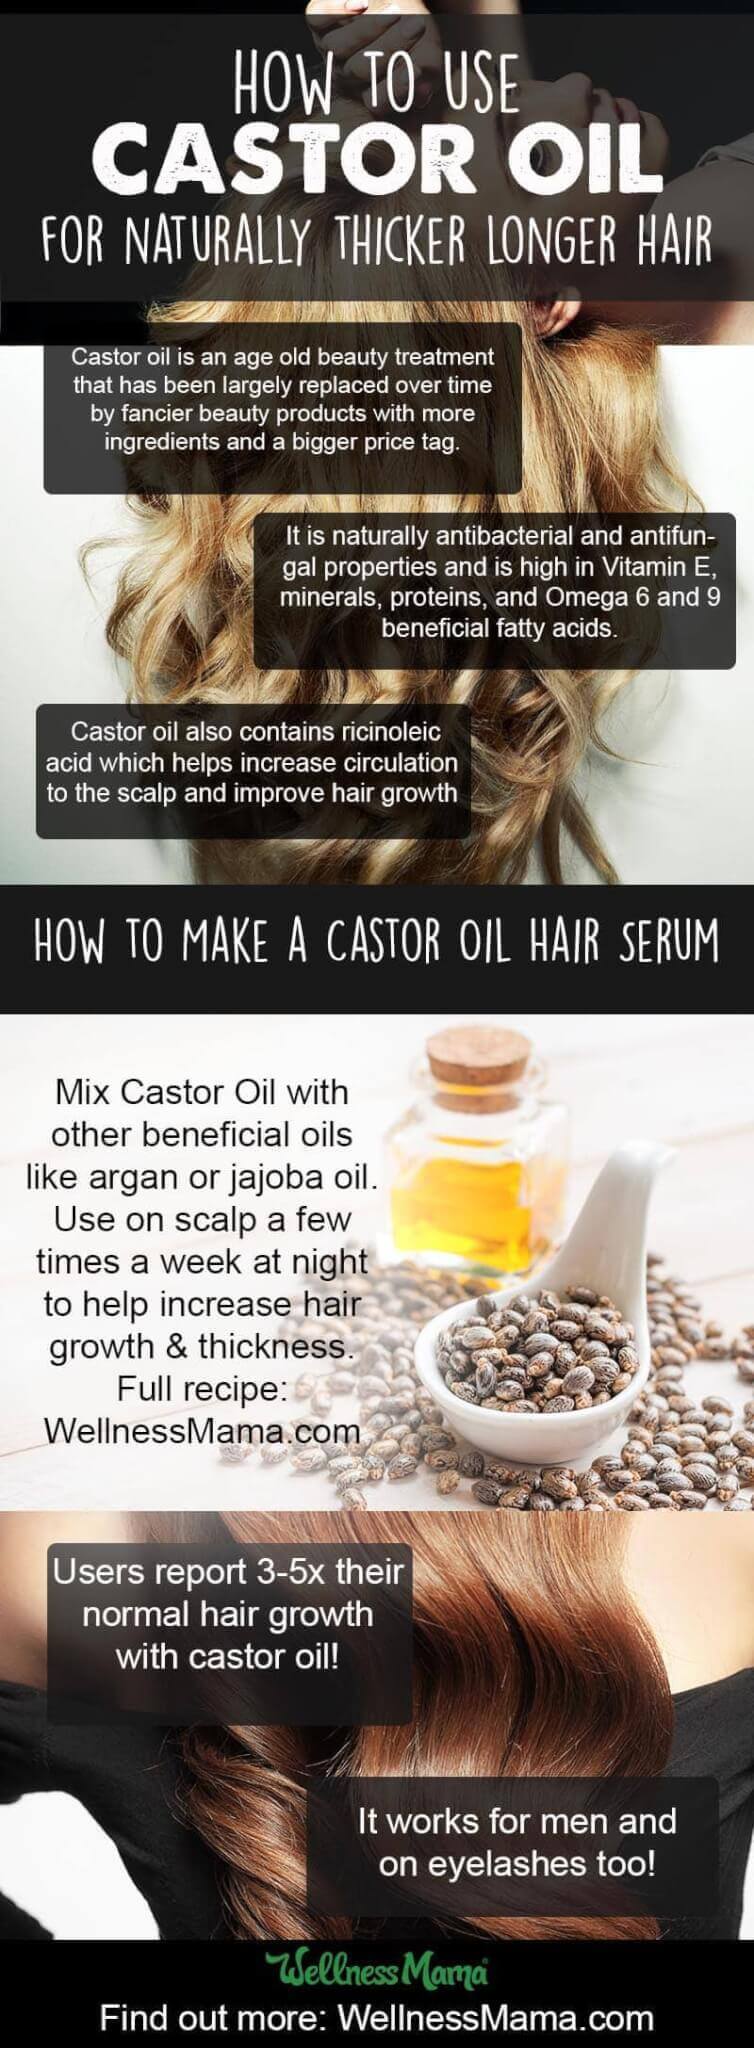 Avanakkenna(Castor oil)for hair growth malayalam|മുടി പെട്ടെന്ന് വളരാൻ  ആവണക്കെണ്ണ|Ep237|AyurvedaDr - YouTube